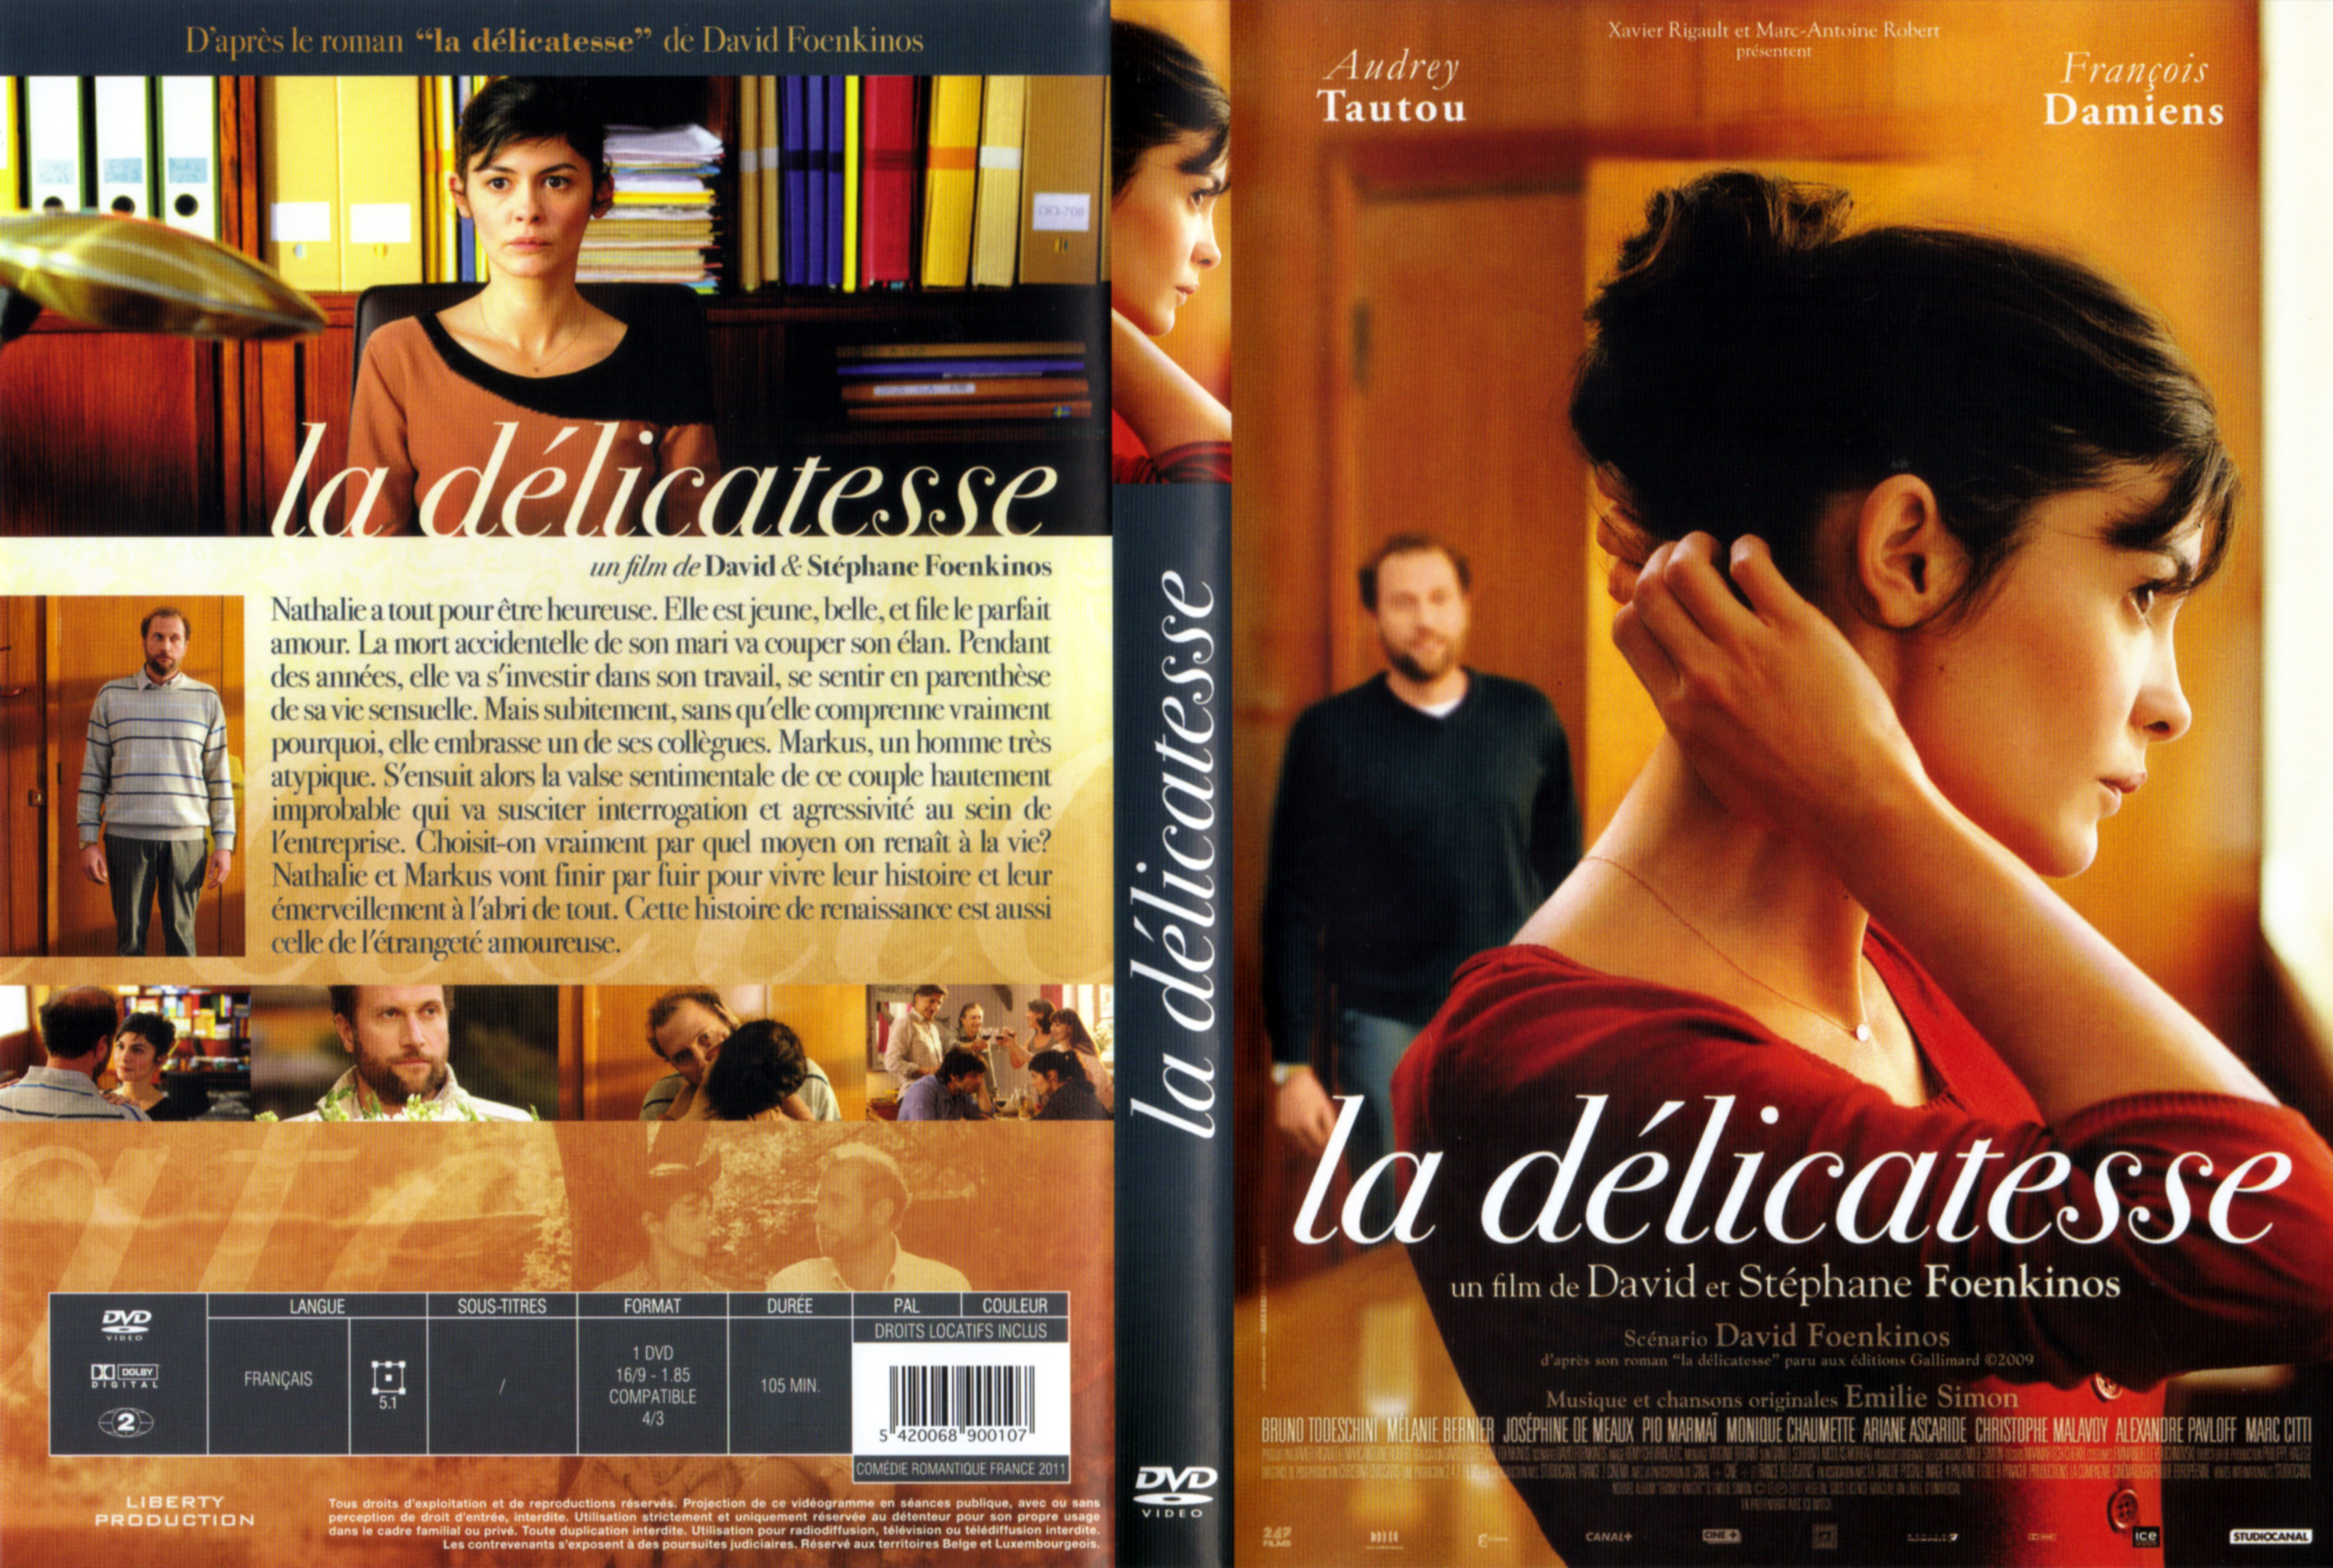 Jaquette DVD La dlicatesse v2